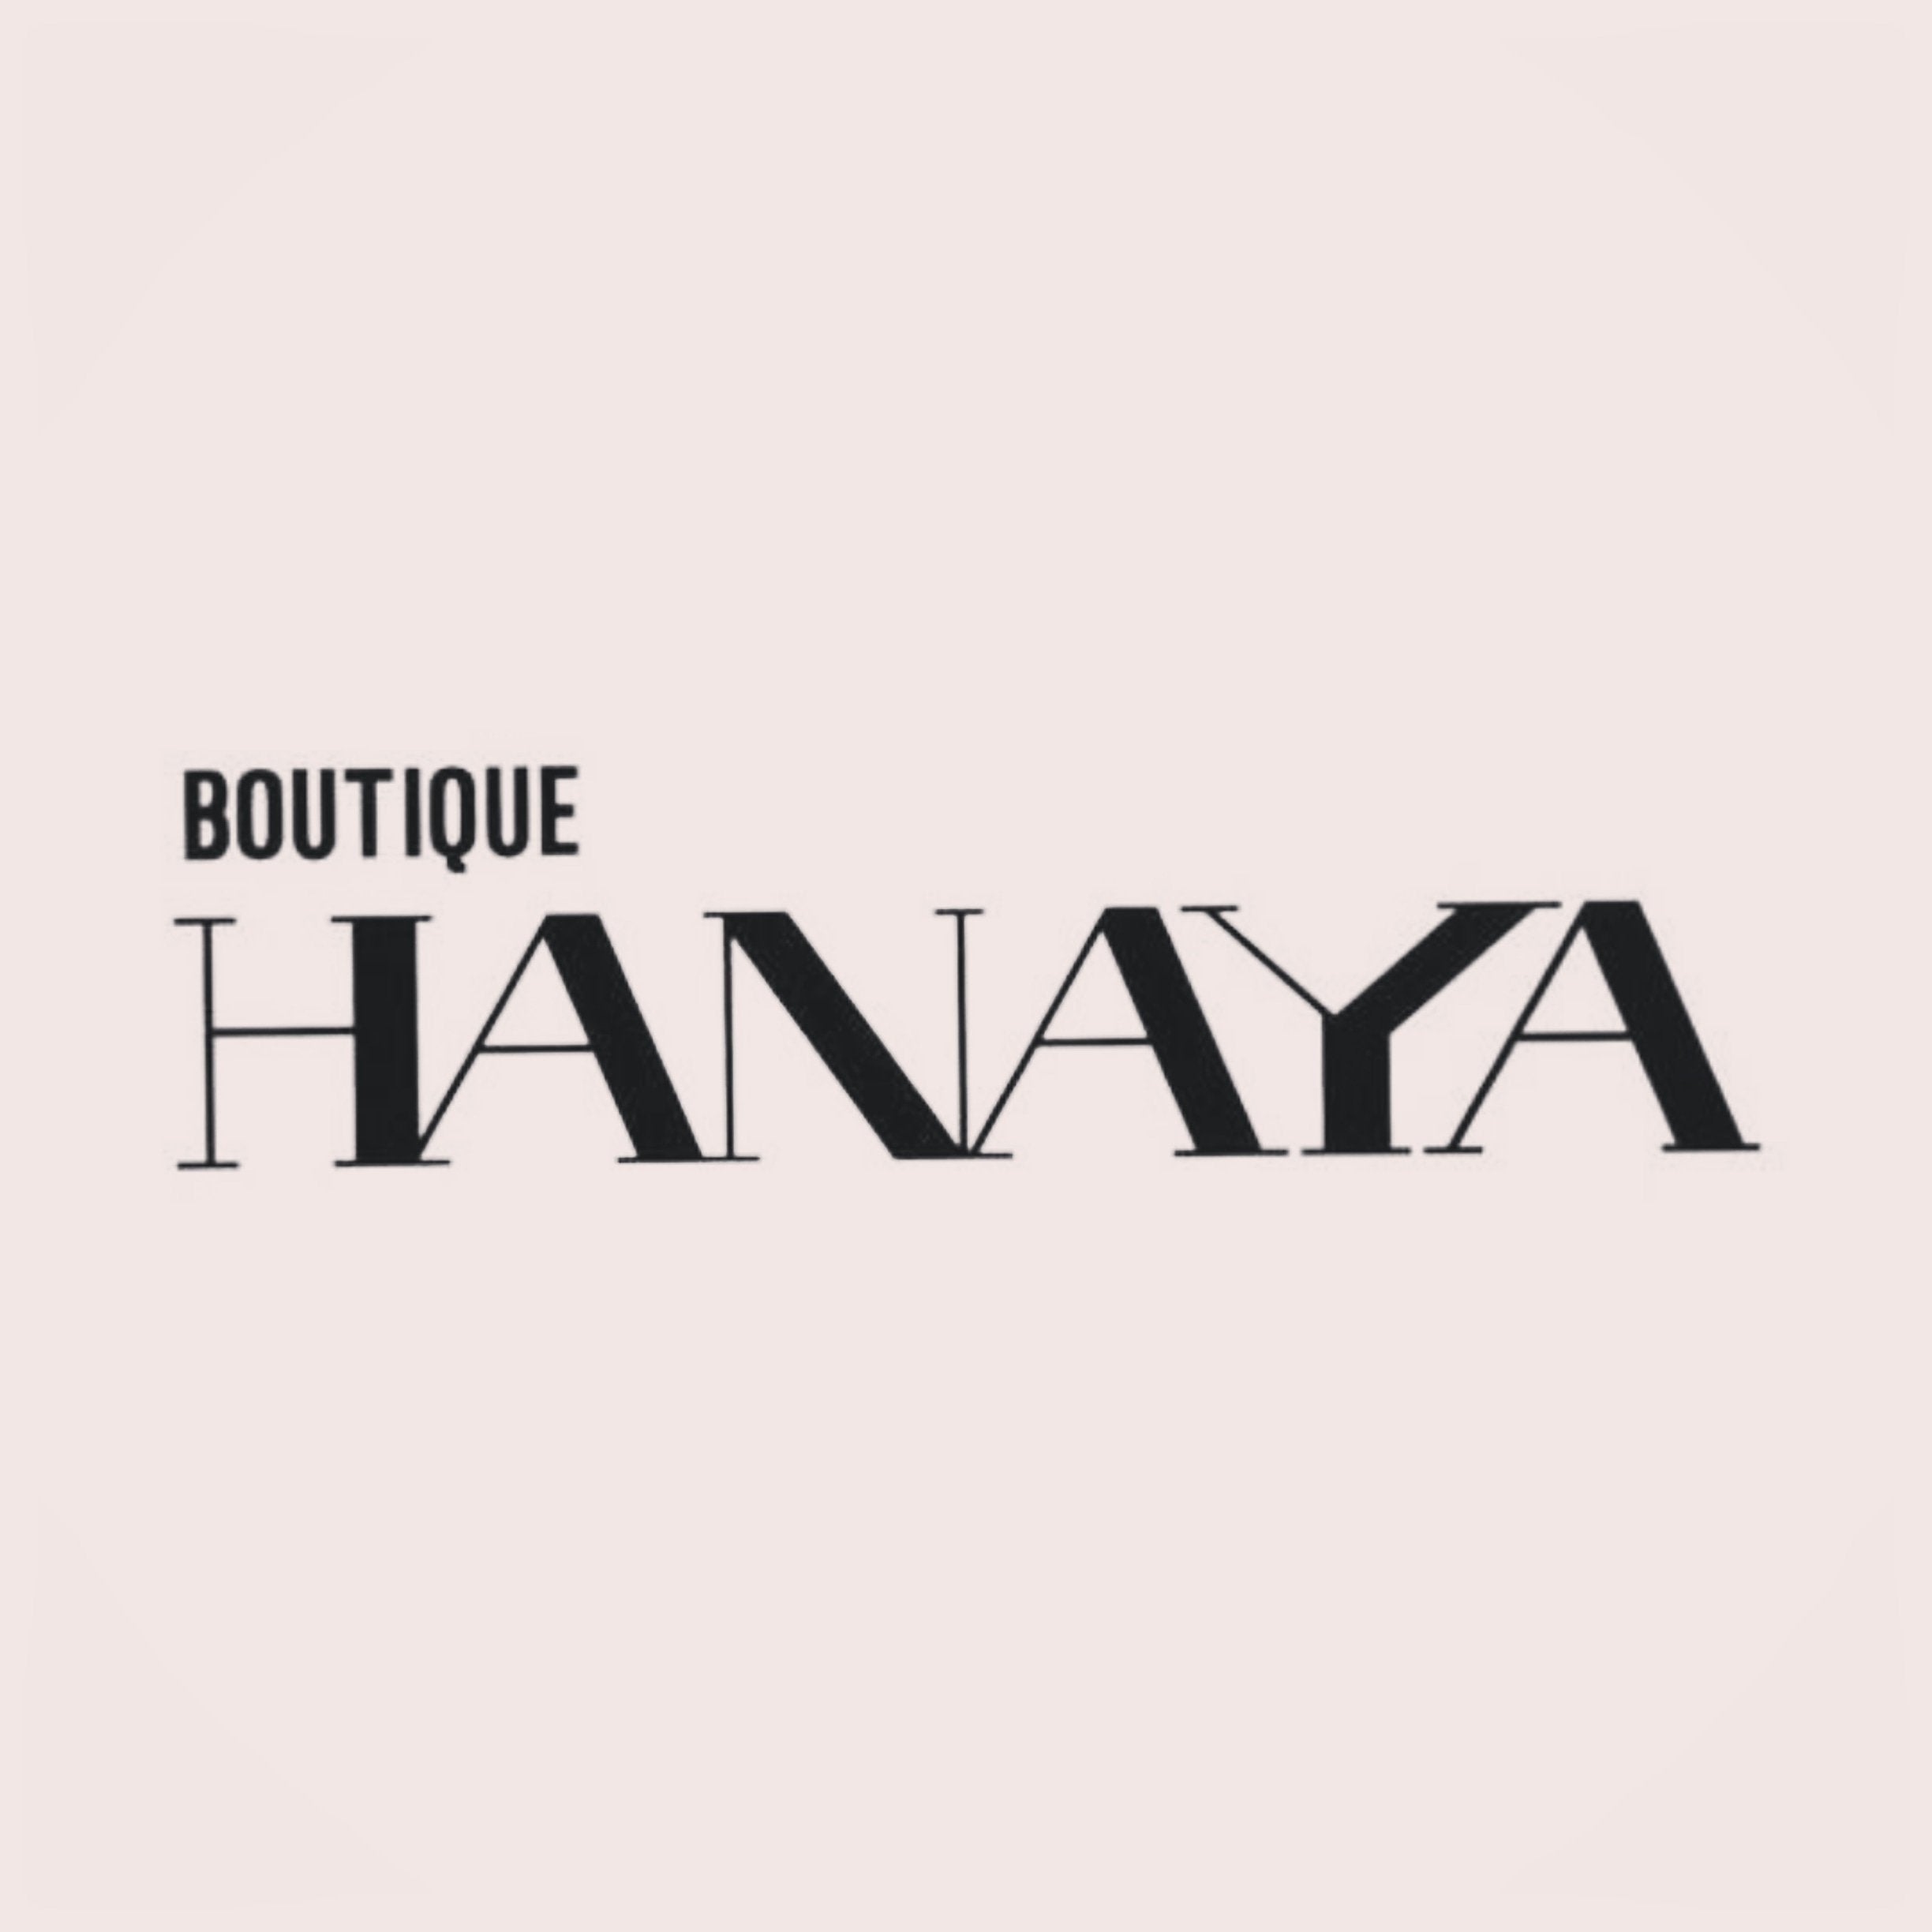 Boutique HANAYA